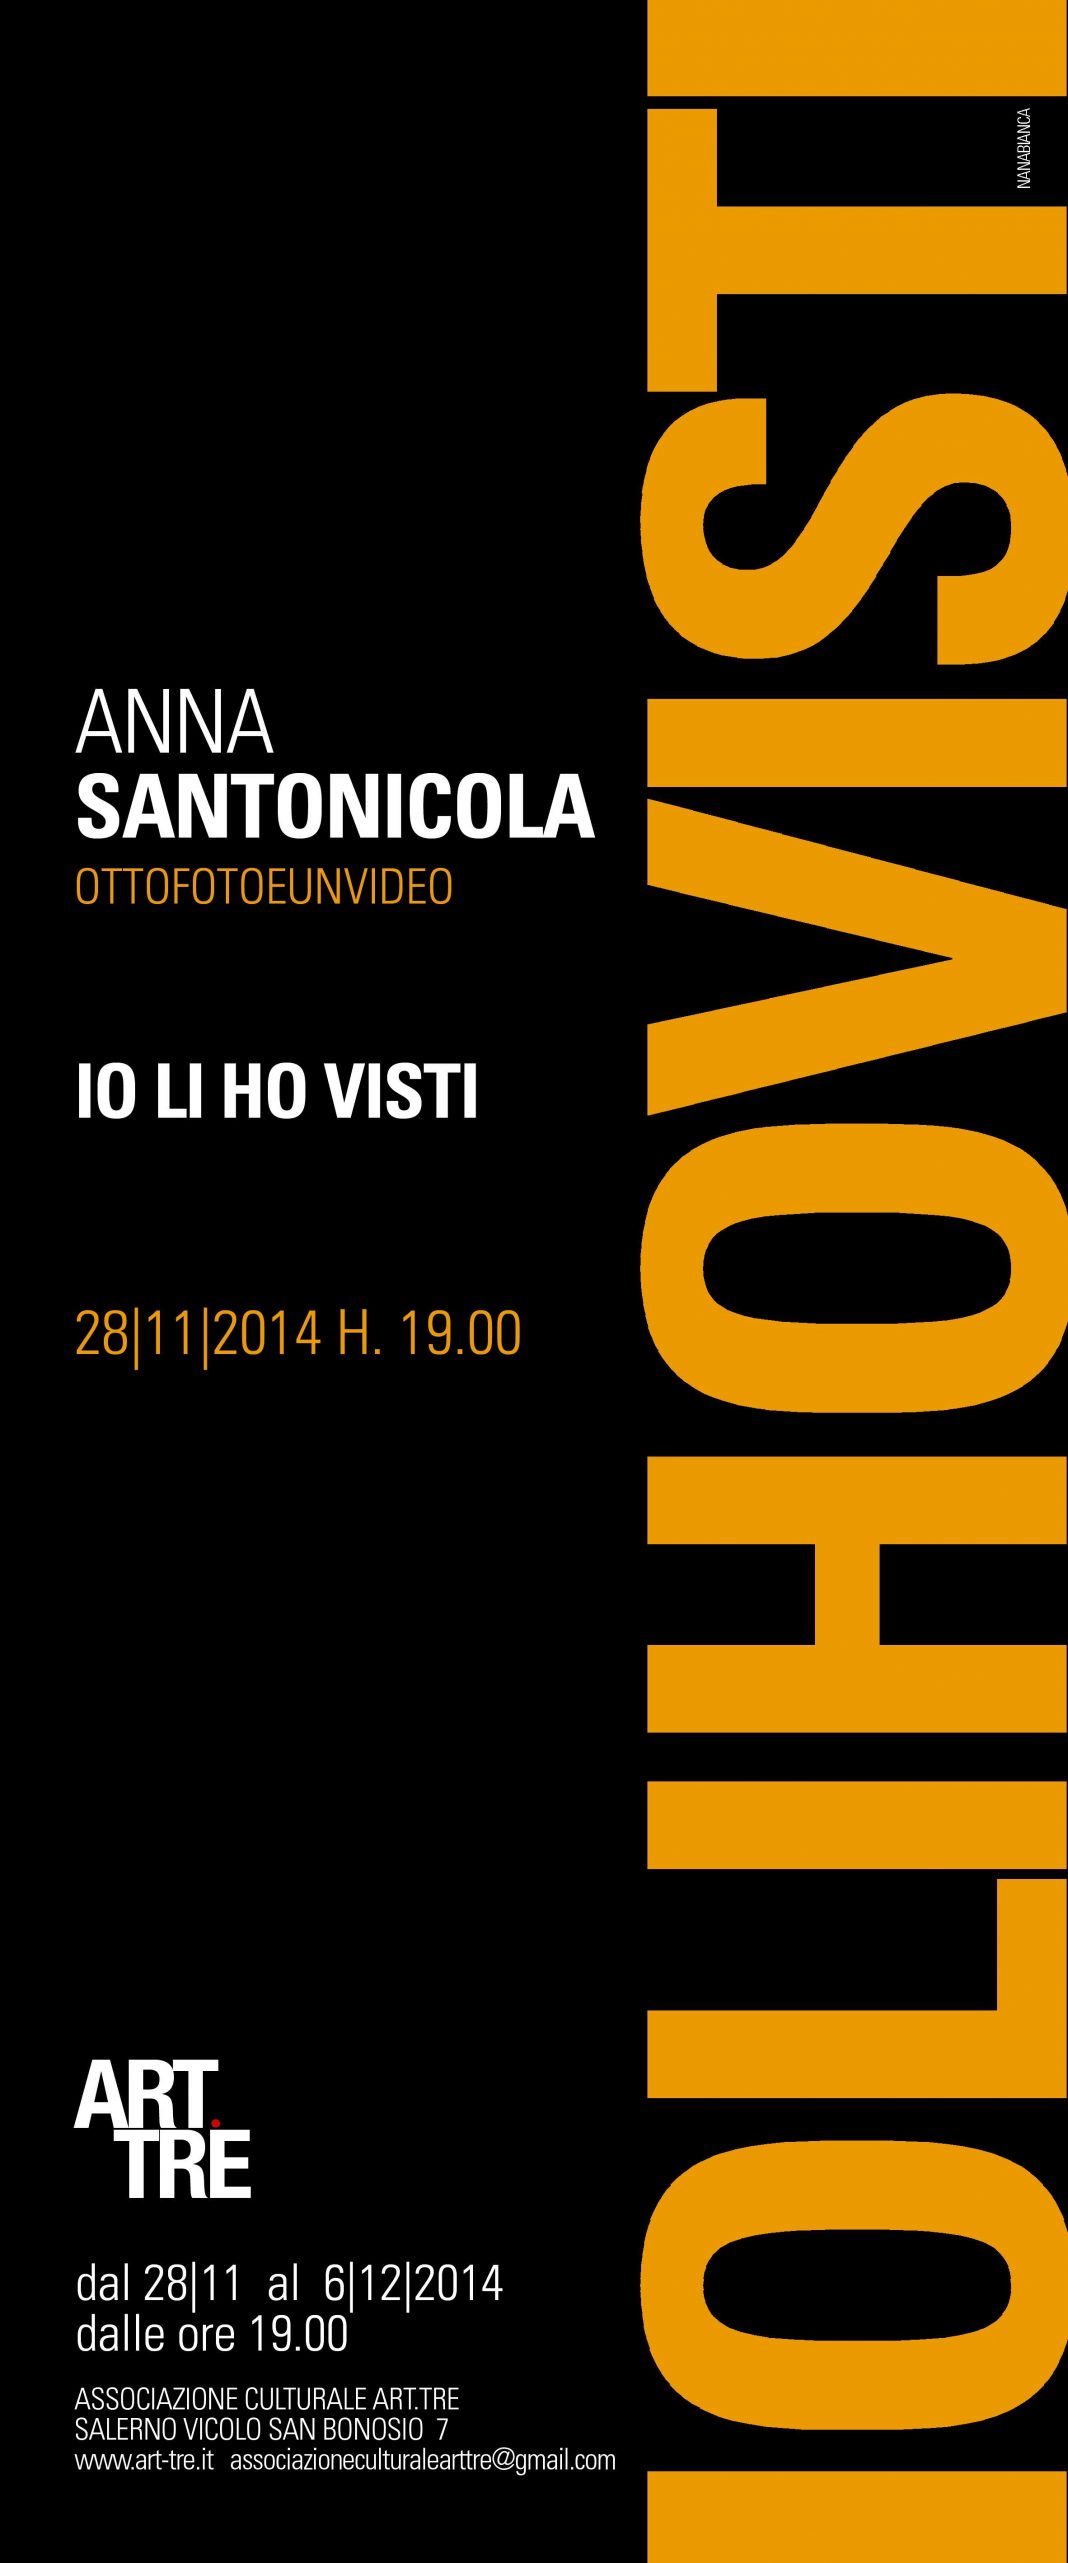 Anna Santonicola – Io li ho vistihttps://www.exibart.com/repository/media/eventi/2014/11/anna-santonicola-8211-io-li-ho-visti-1068x2563.jpg